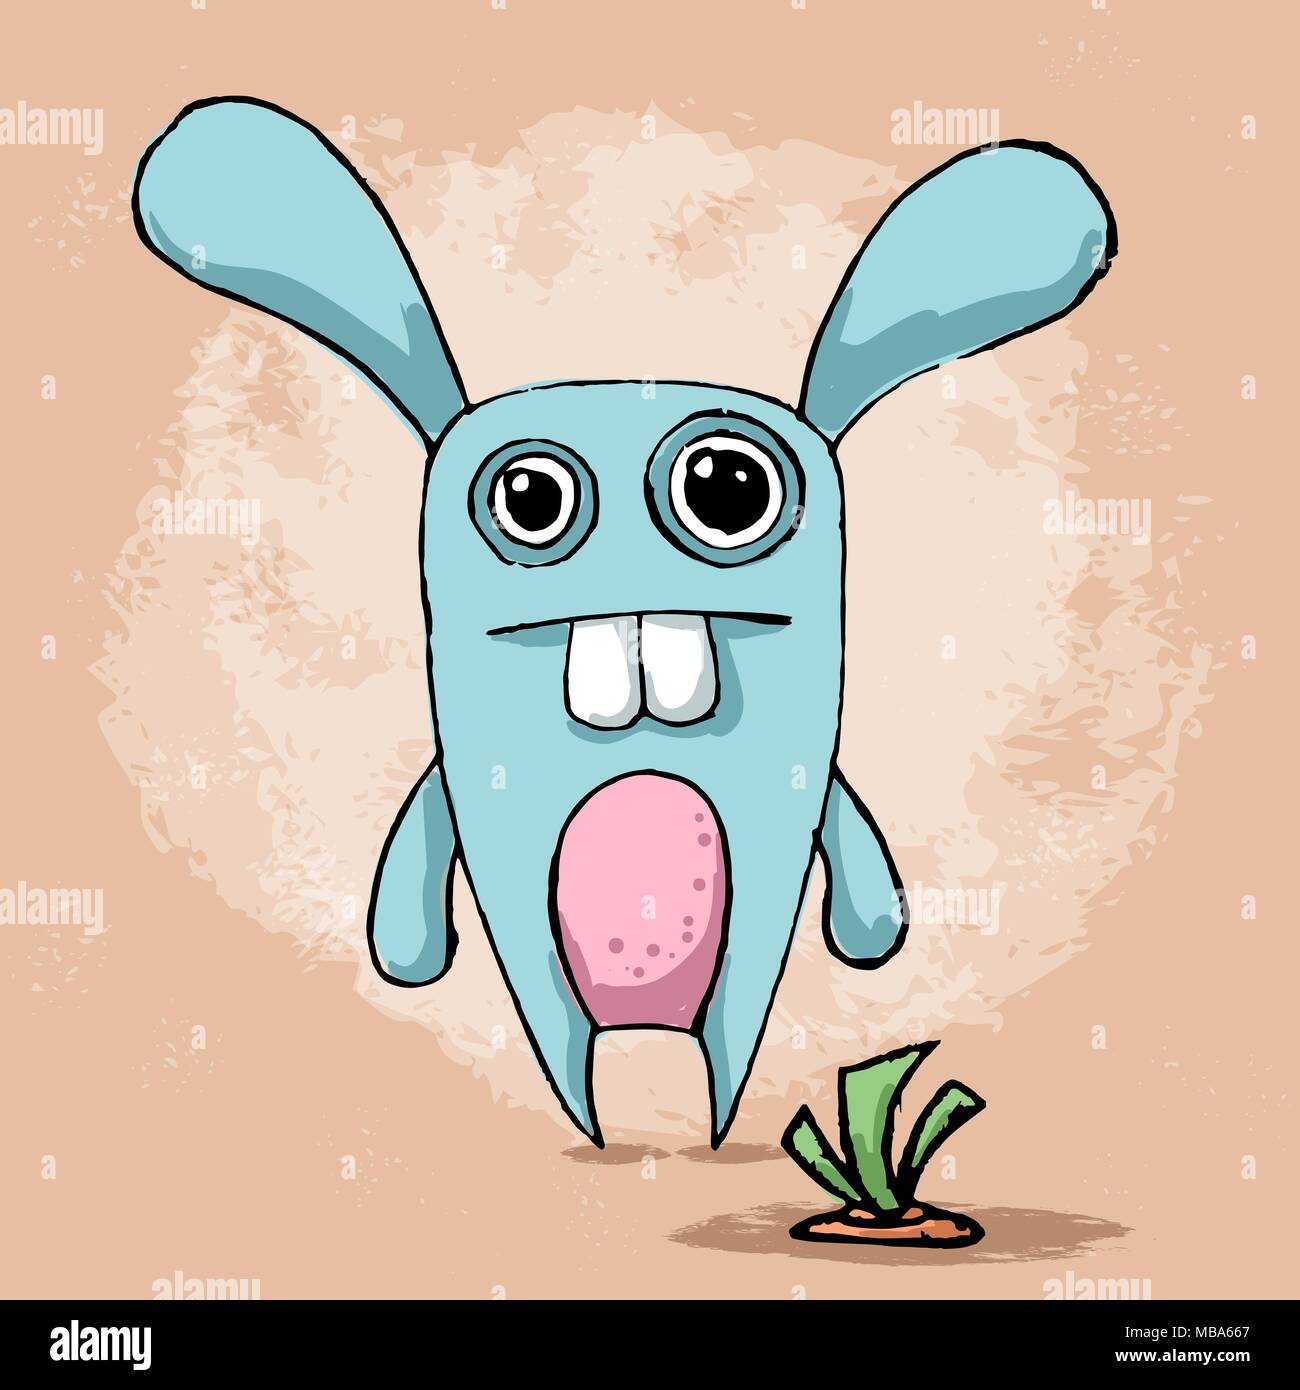 Crazy, fanny, cute rabbit character illustration. Stock Vector